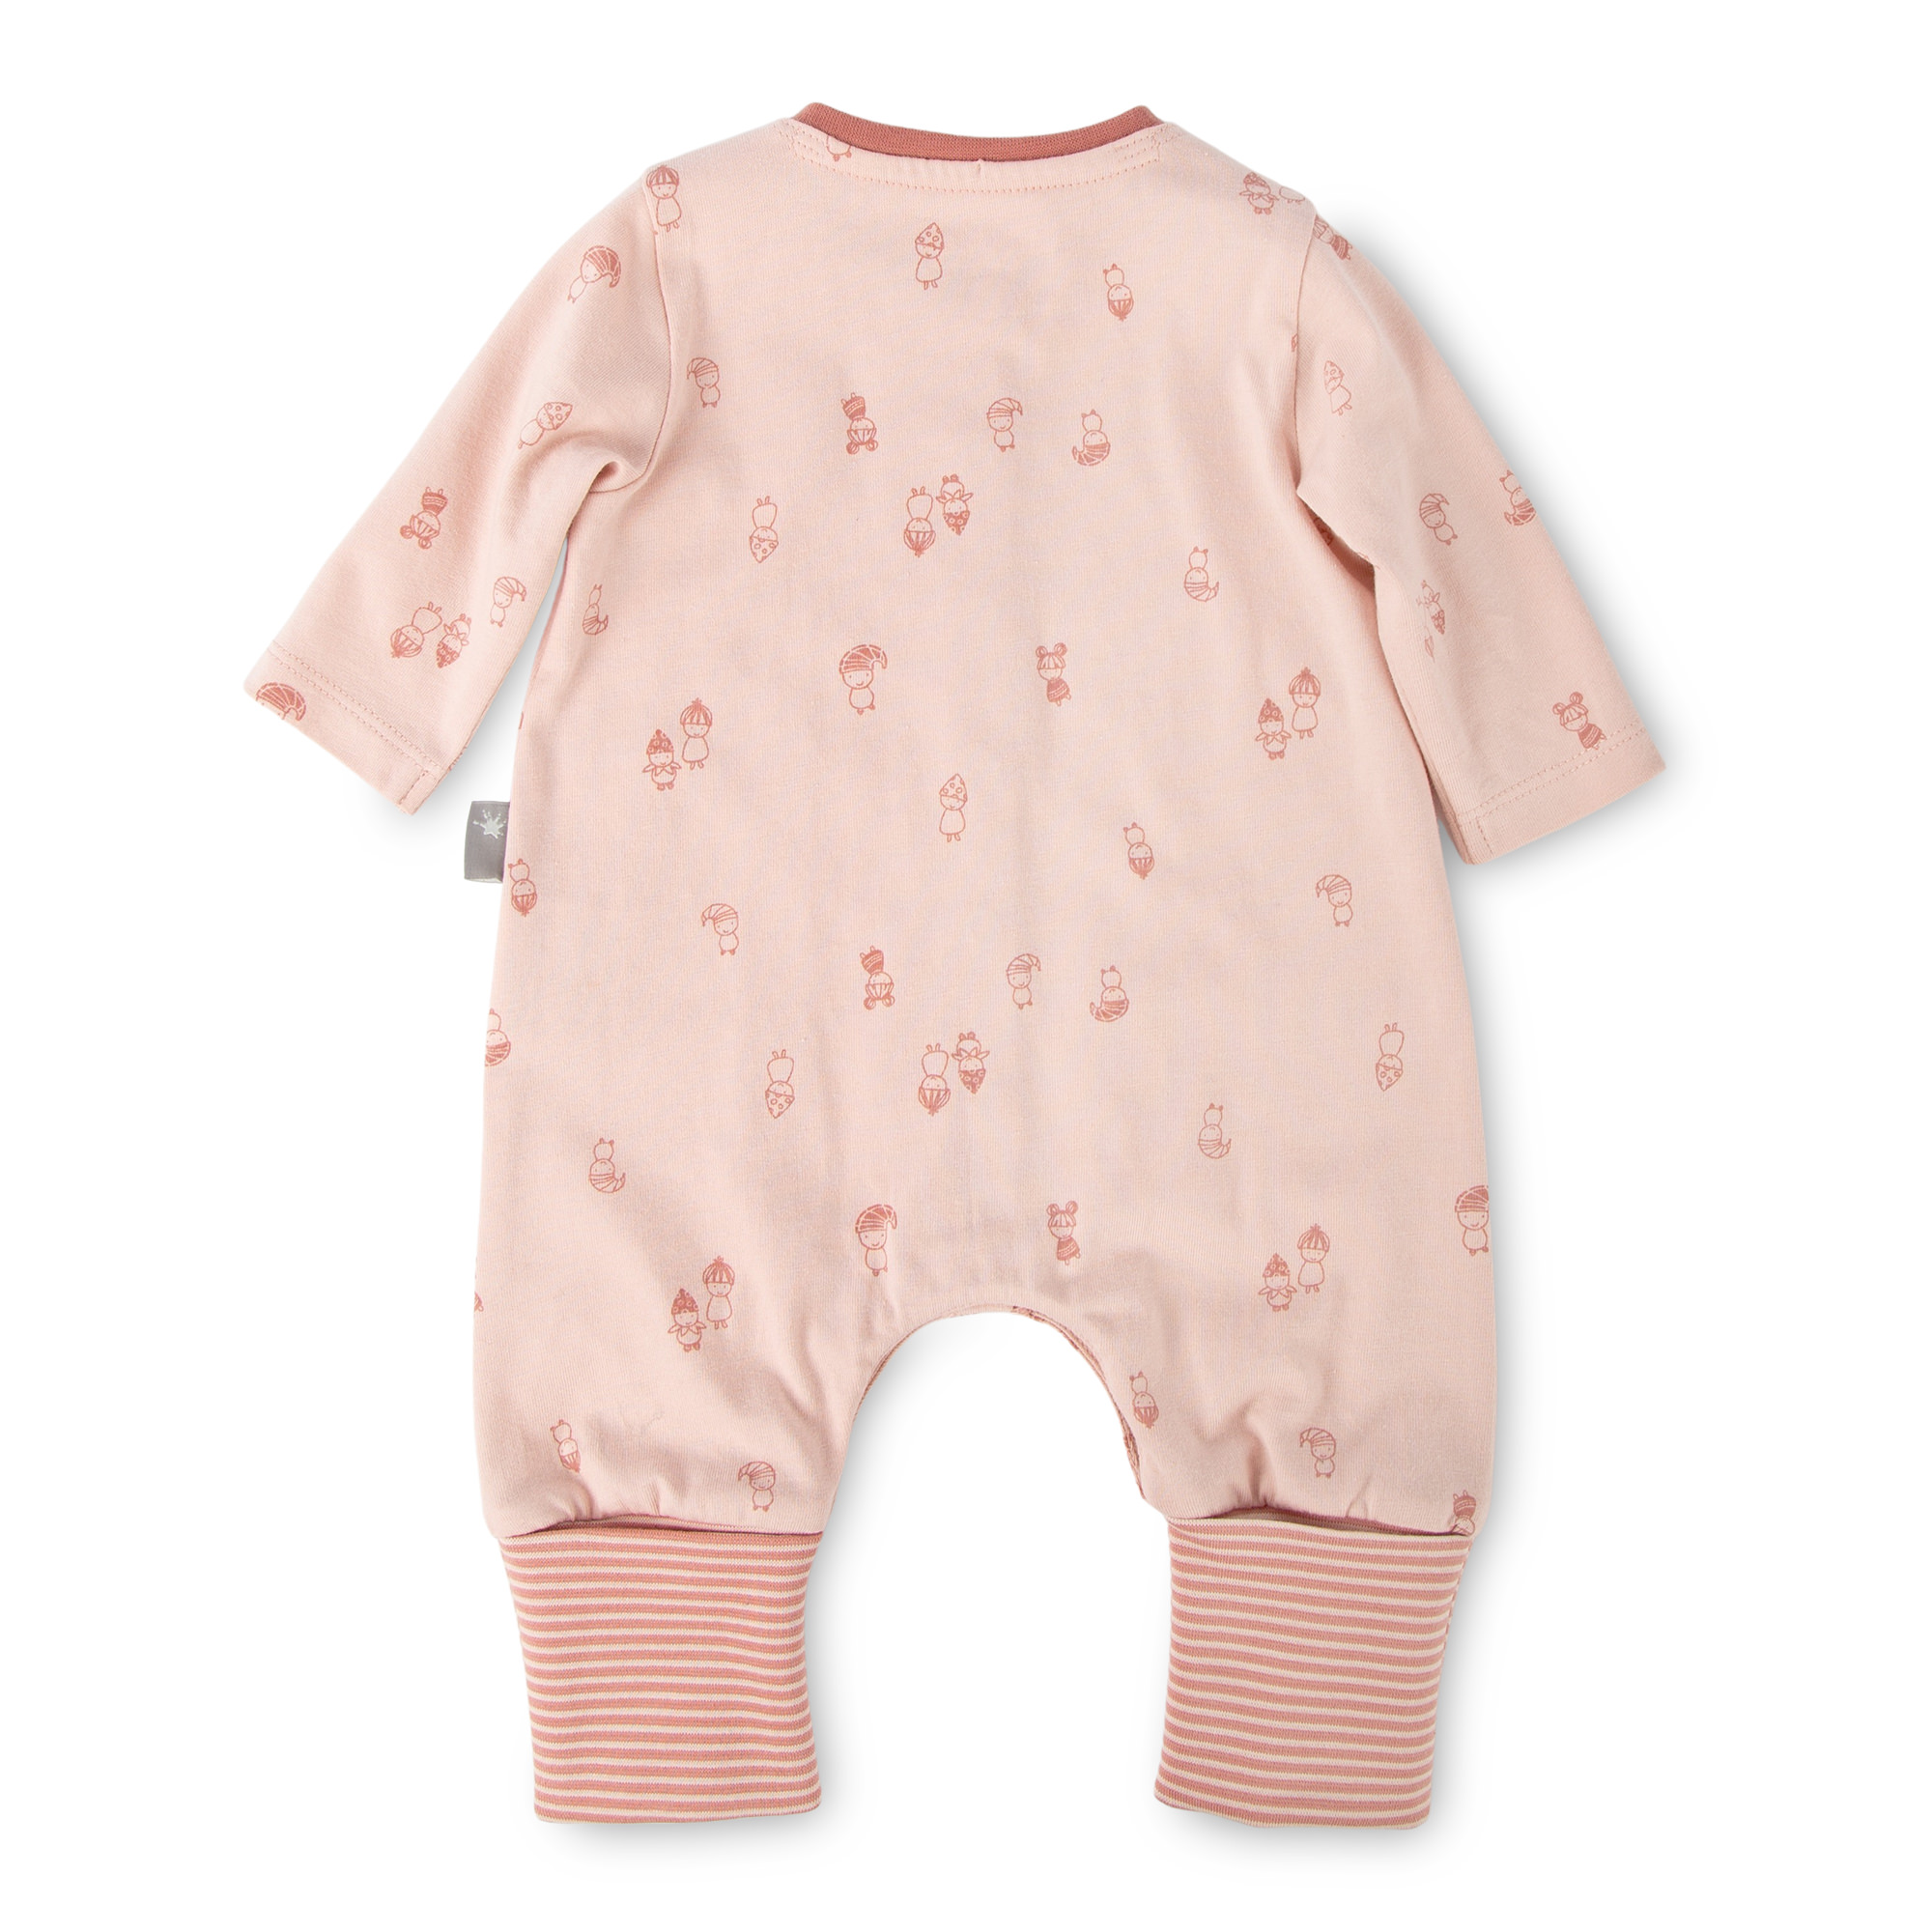 Newborn baby long sleeve romper, foldable leg cuffs, pink